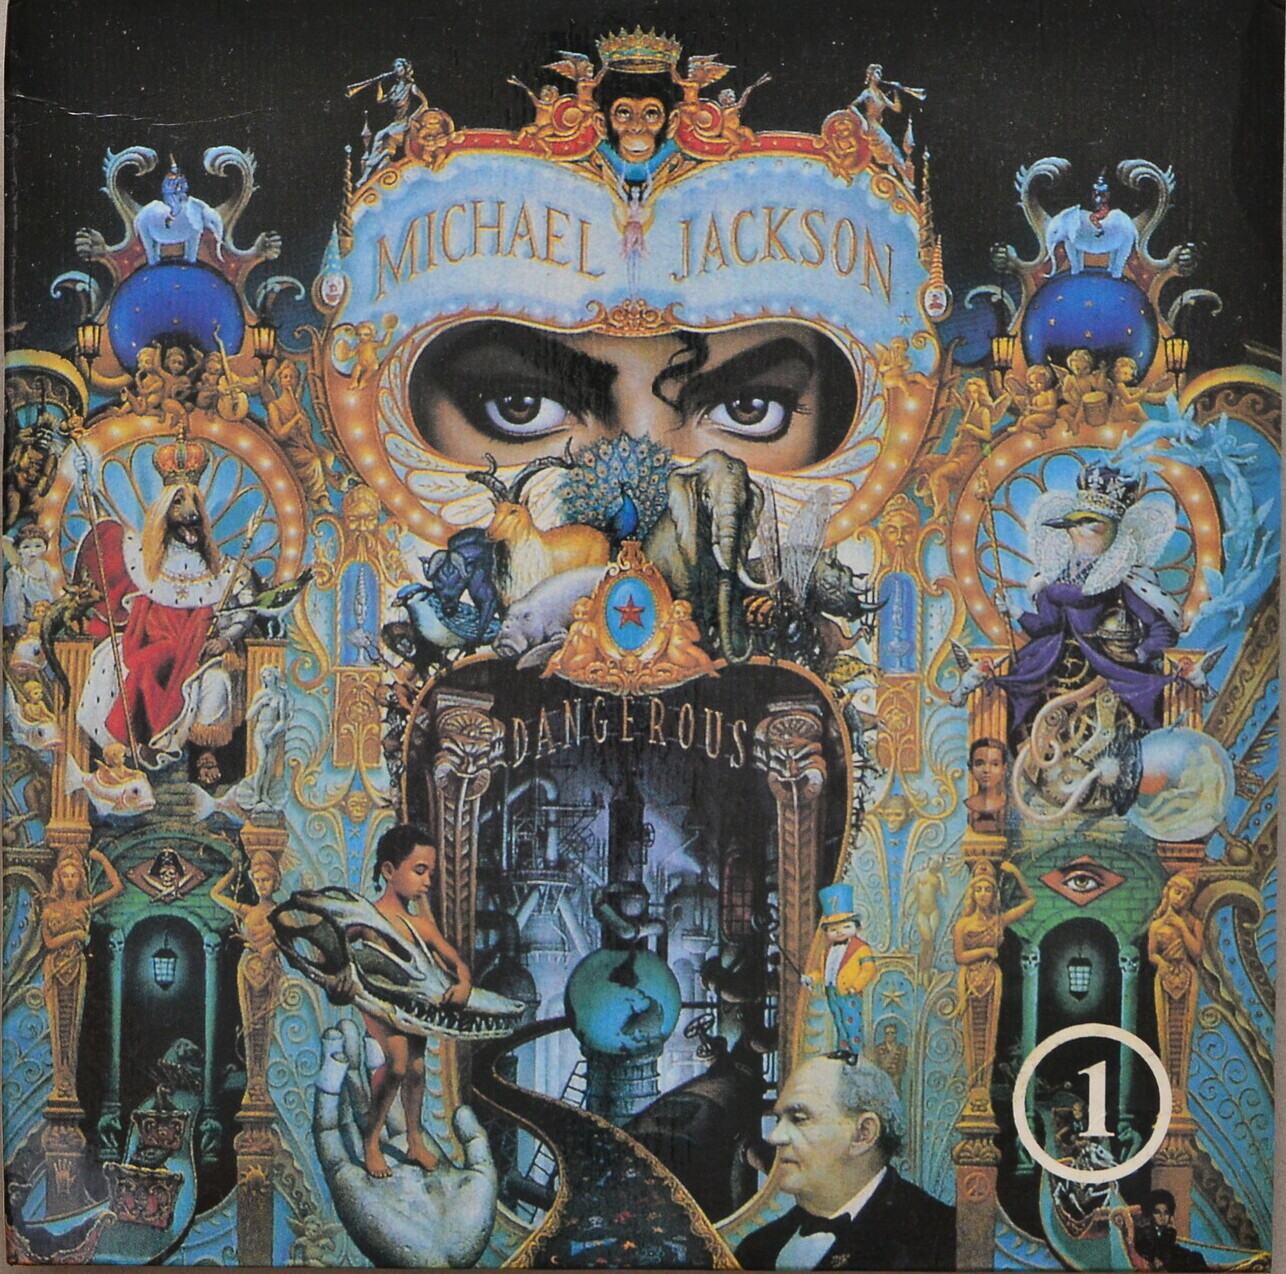 Michael Jackson - Dangerous (1)